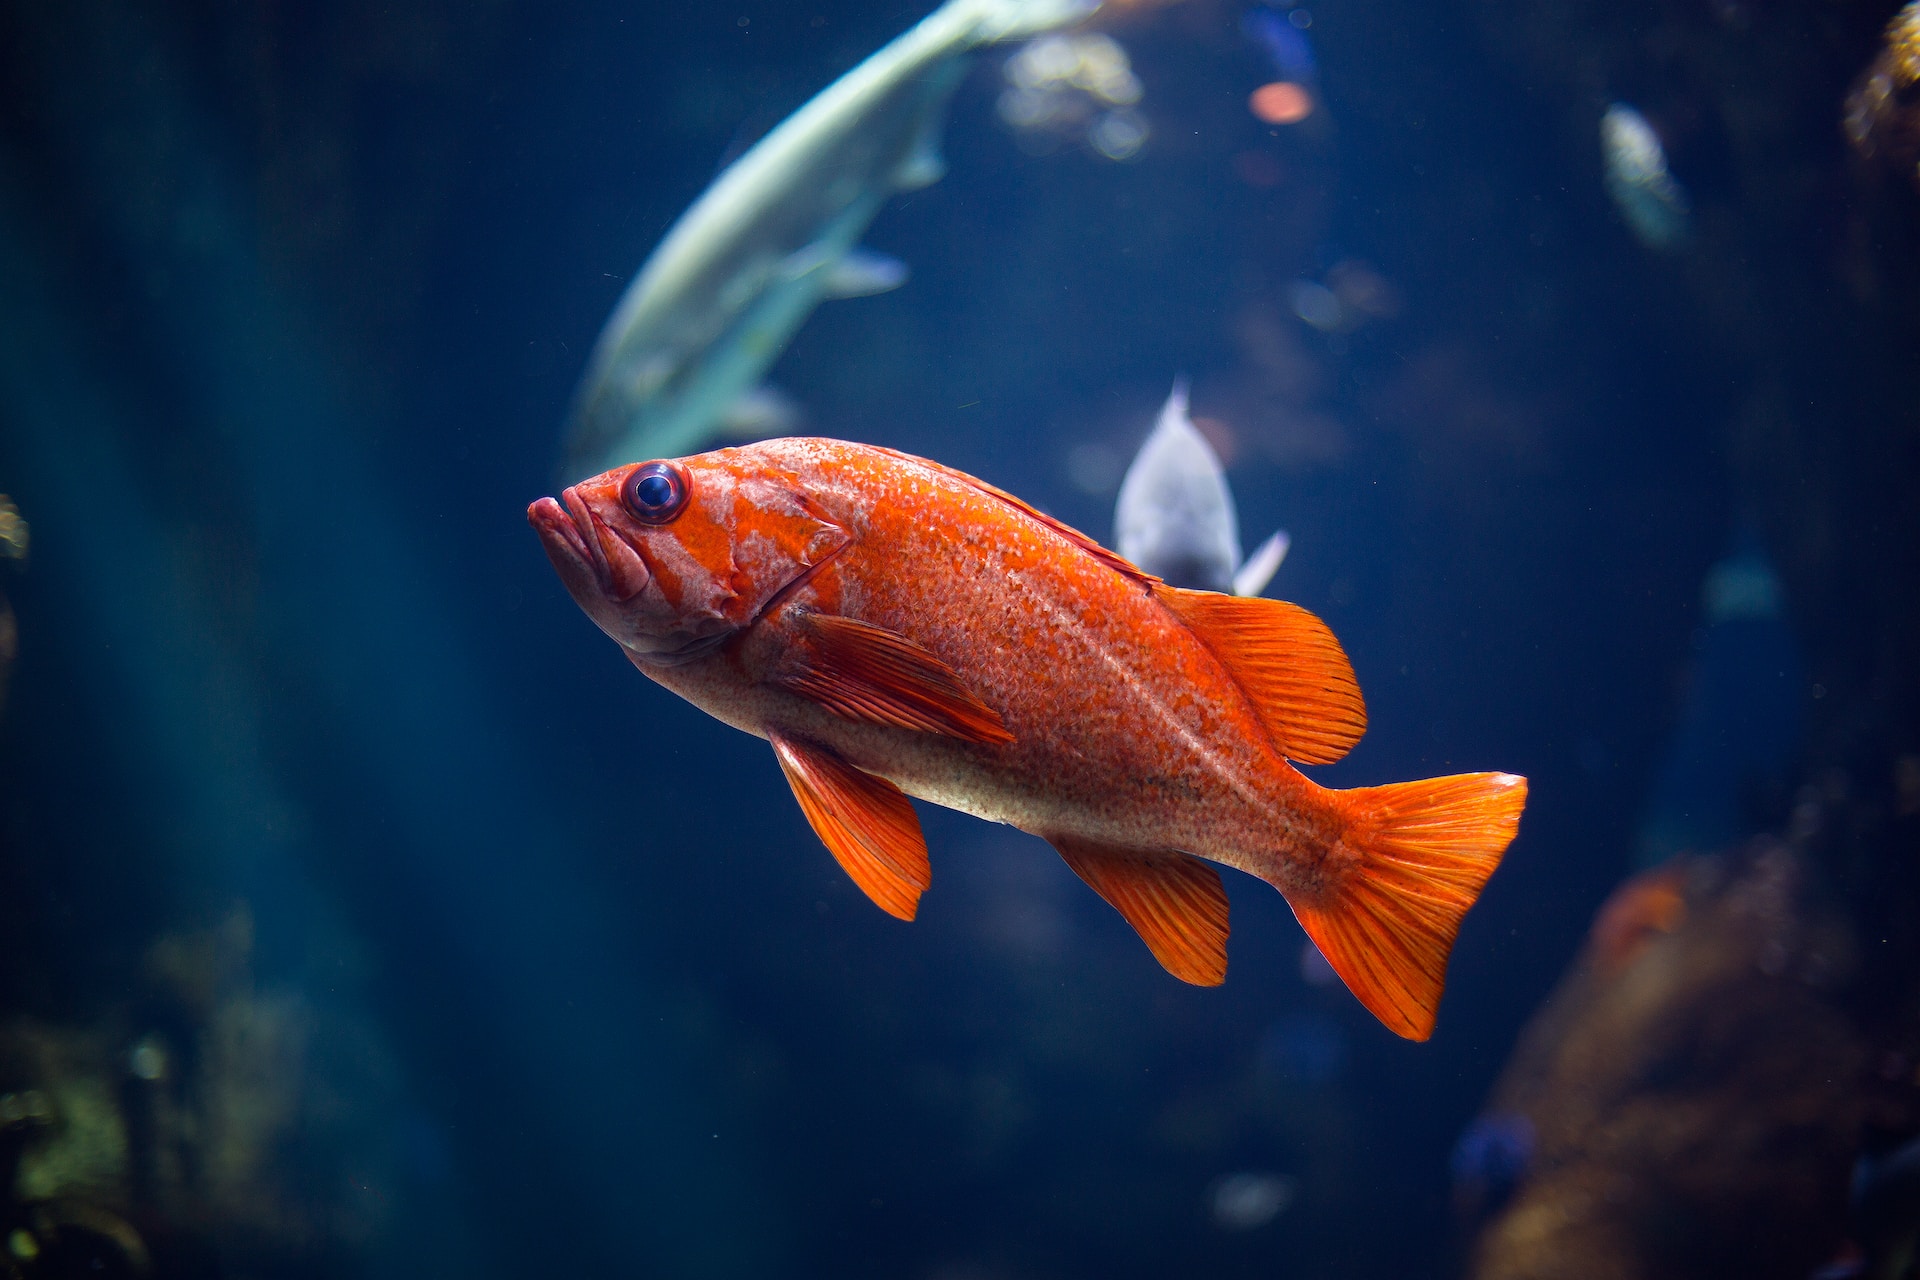 An orange fish swimming in the ocean